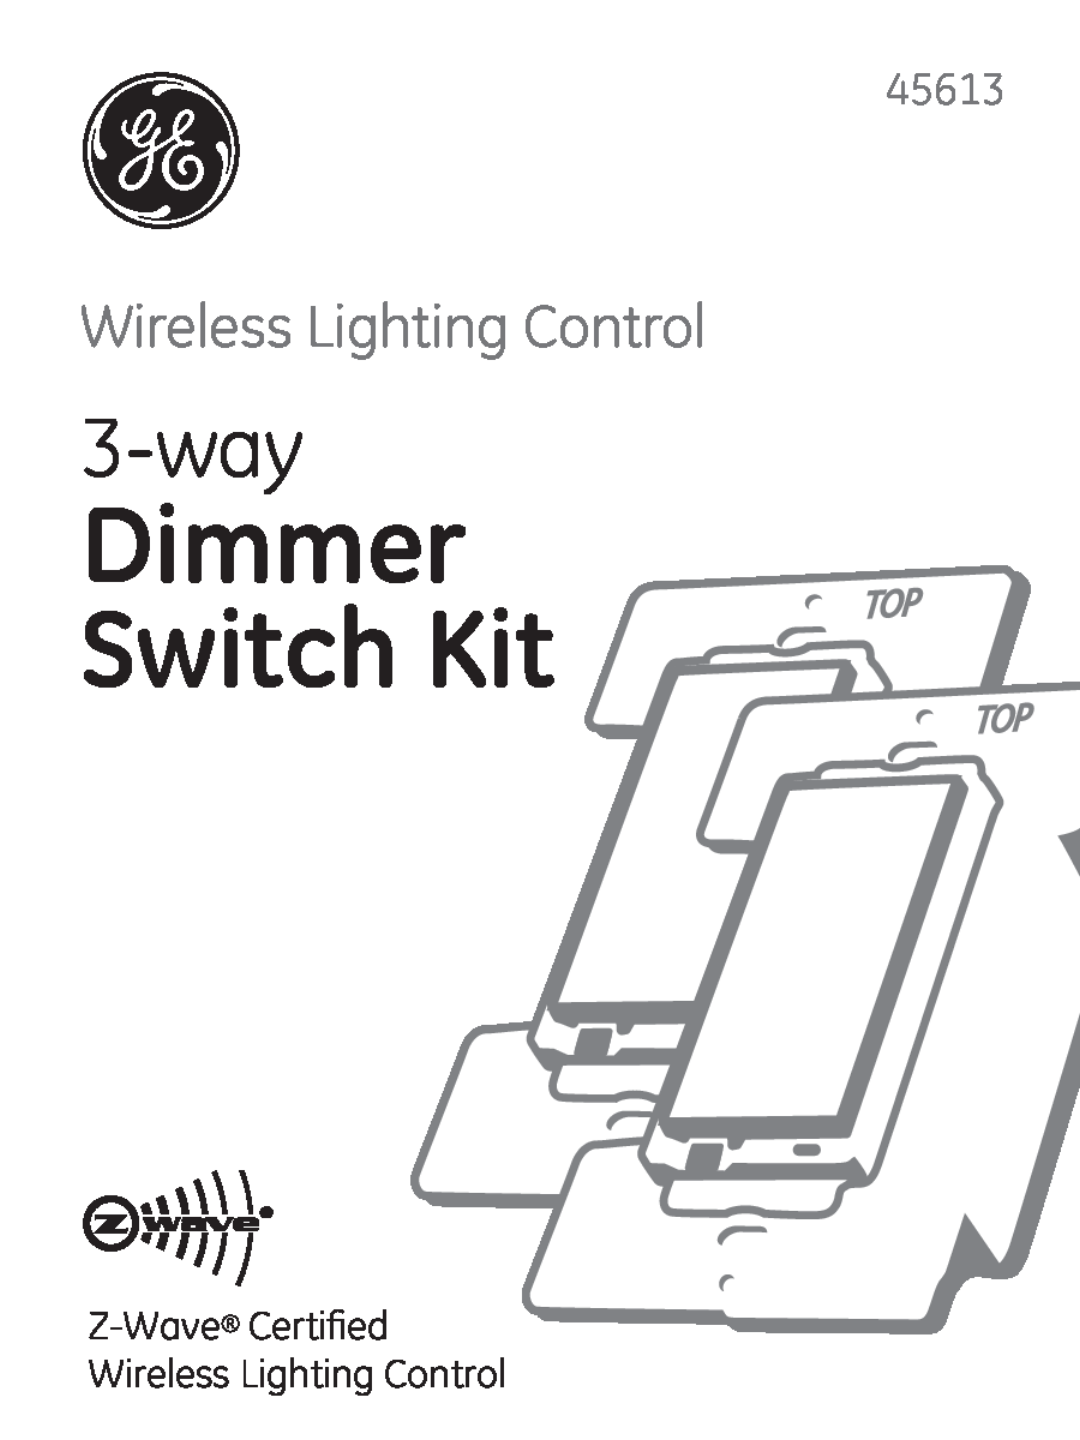 Jasco ZWAVEKIT manual Dimmer Switch Kit, 3-way, Wireless Lighting Control, 45613 